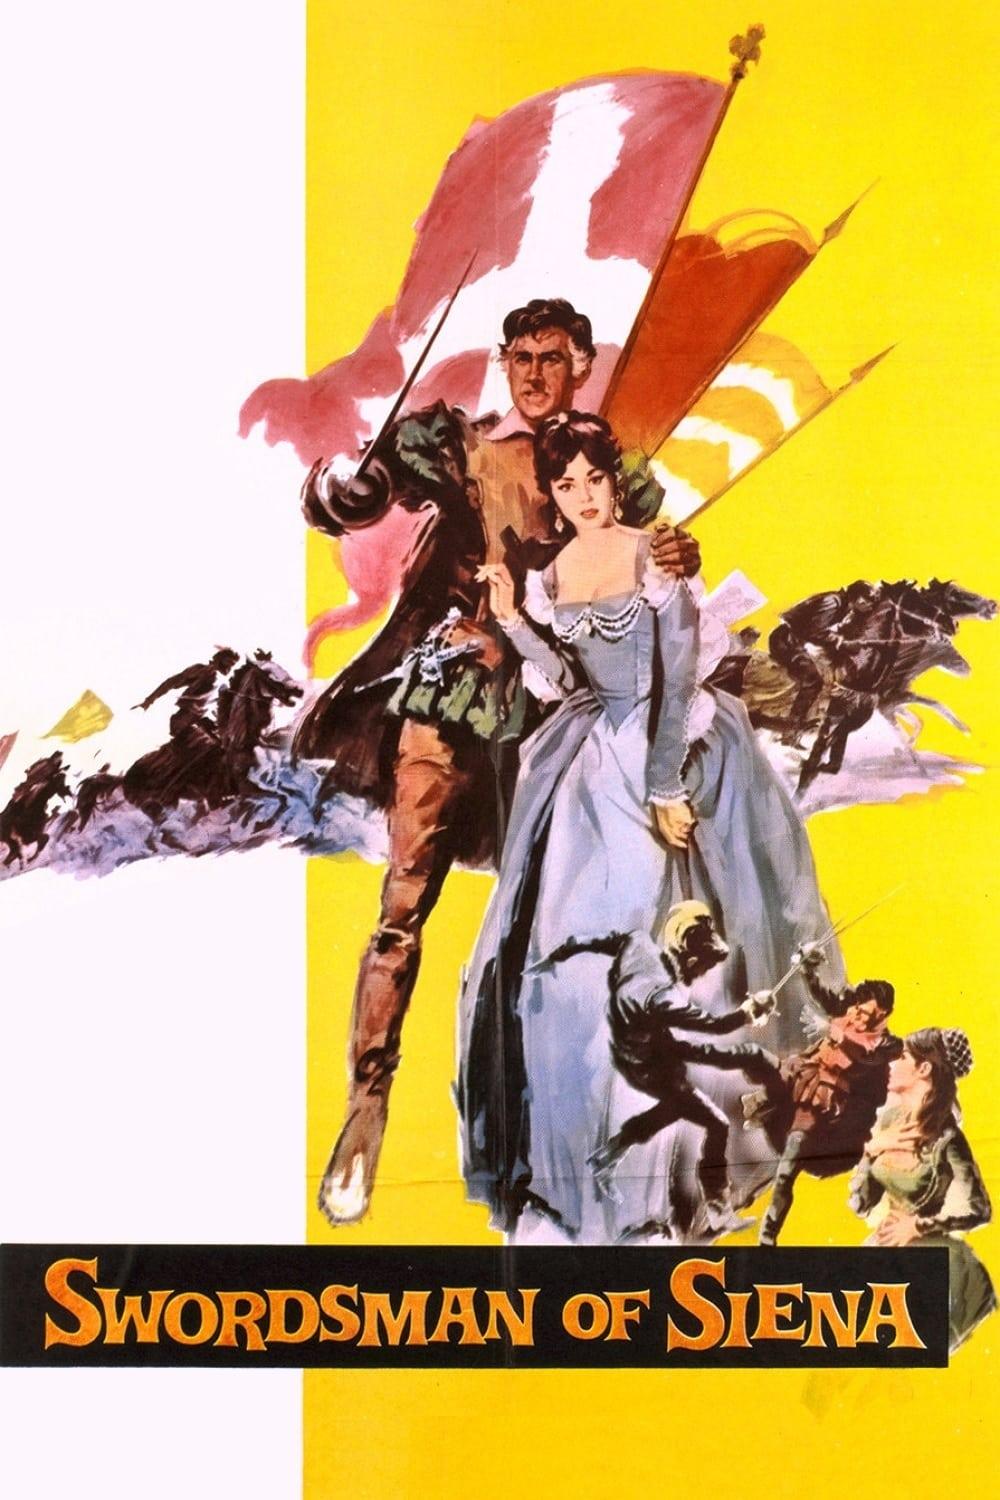 The Swordsman of Siena poster